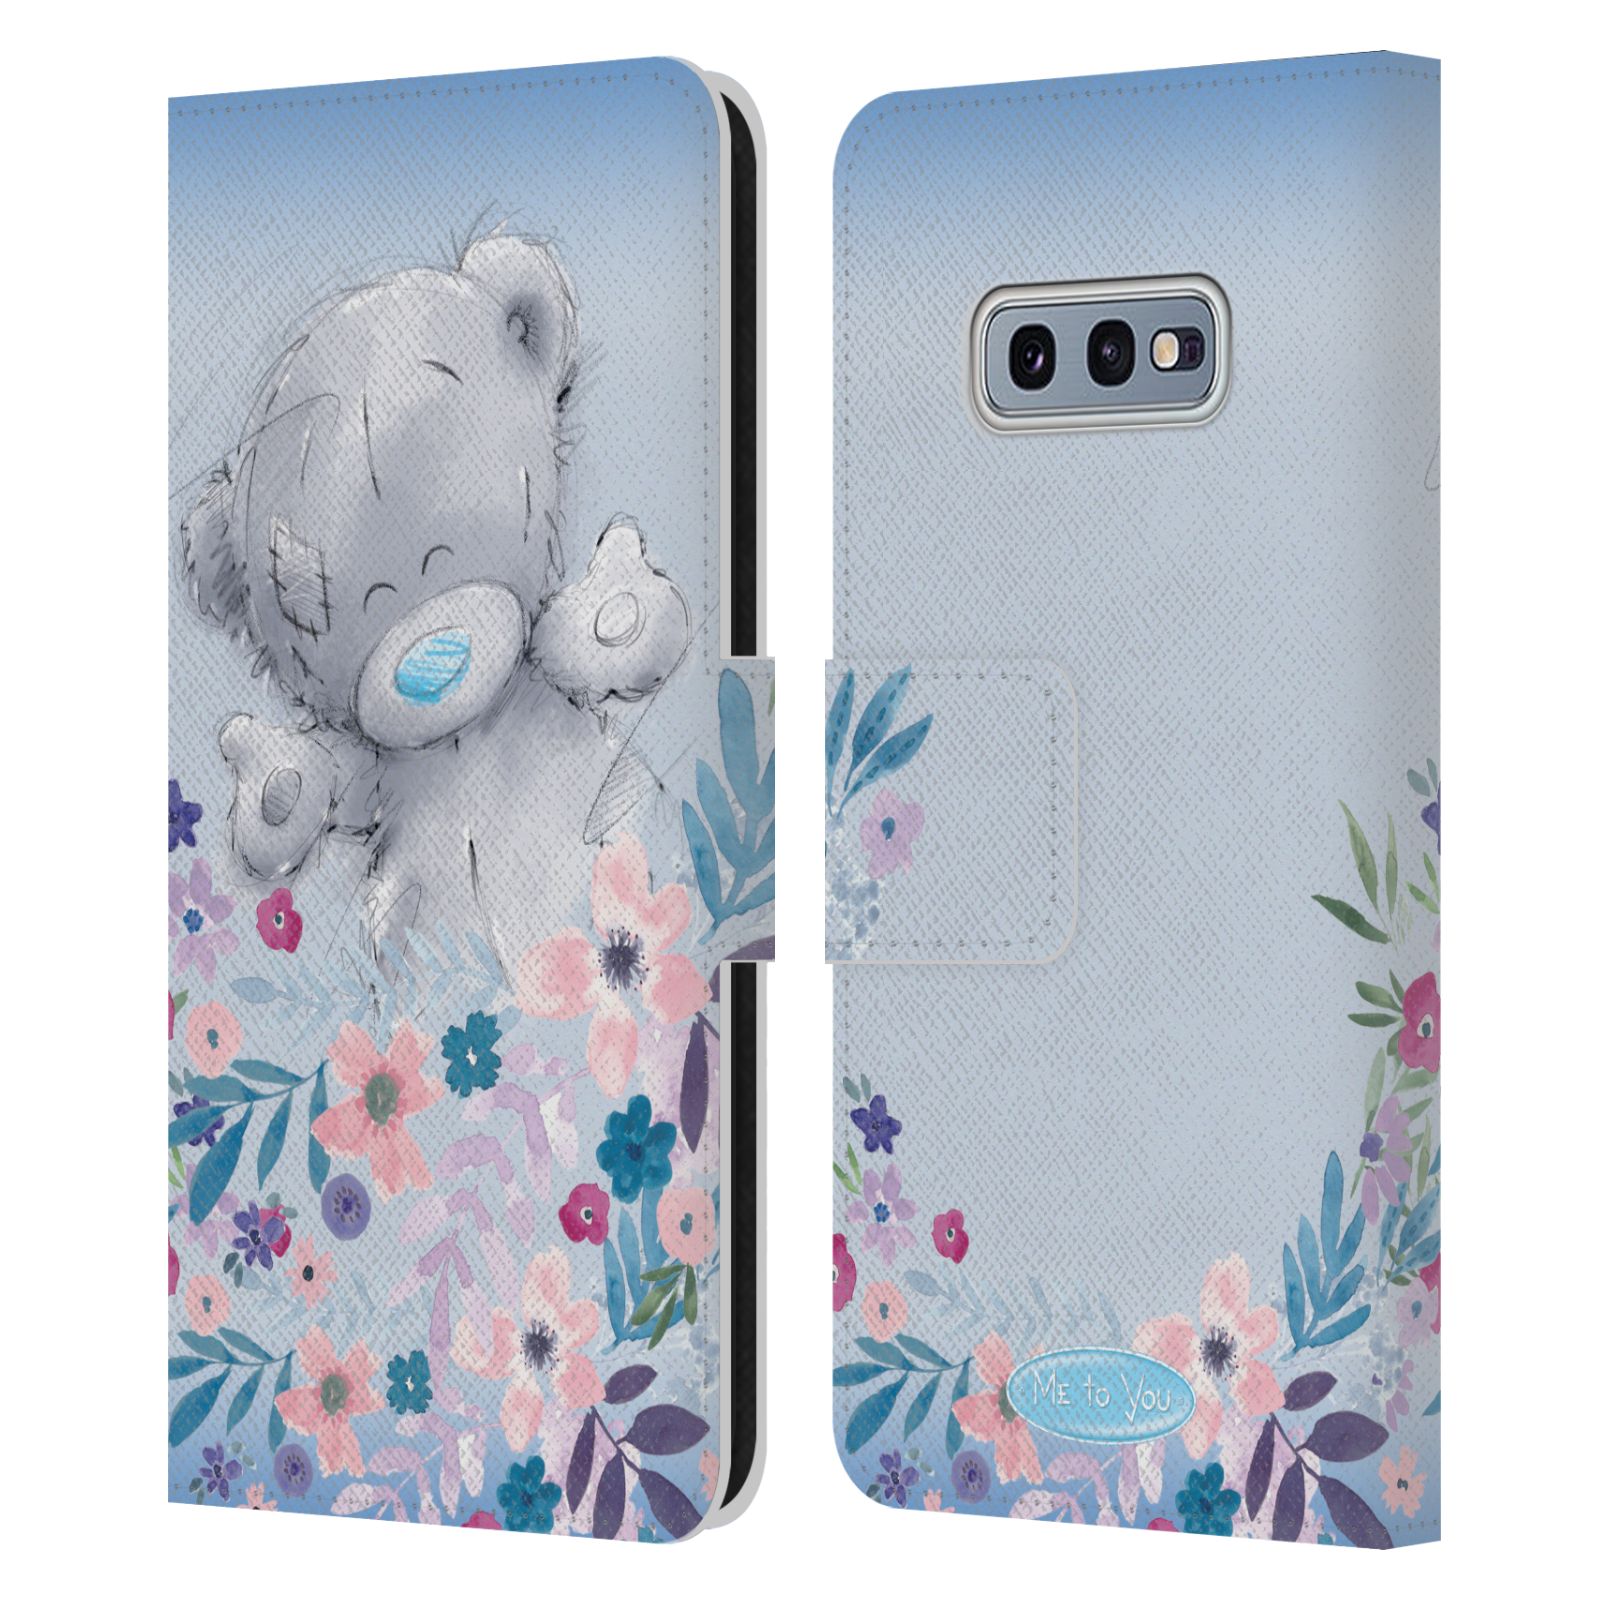 Pouzdro na mobil Samsung Galaxy S10e  - HEAD CASE - Me To You - Medvídek mezi květinami